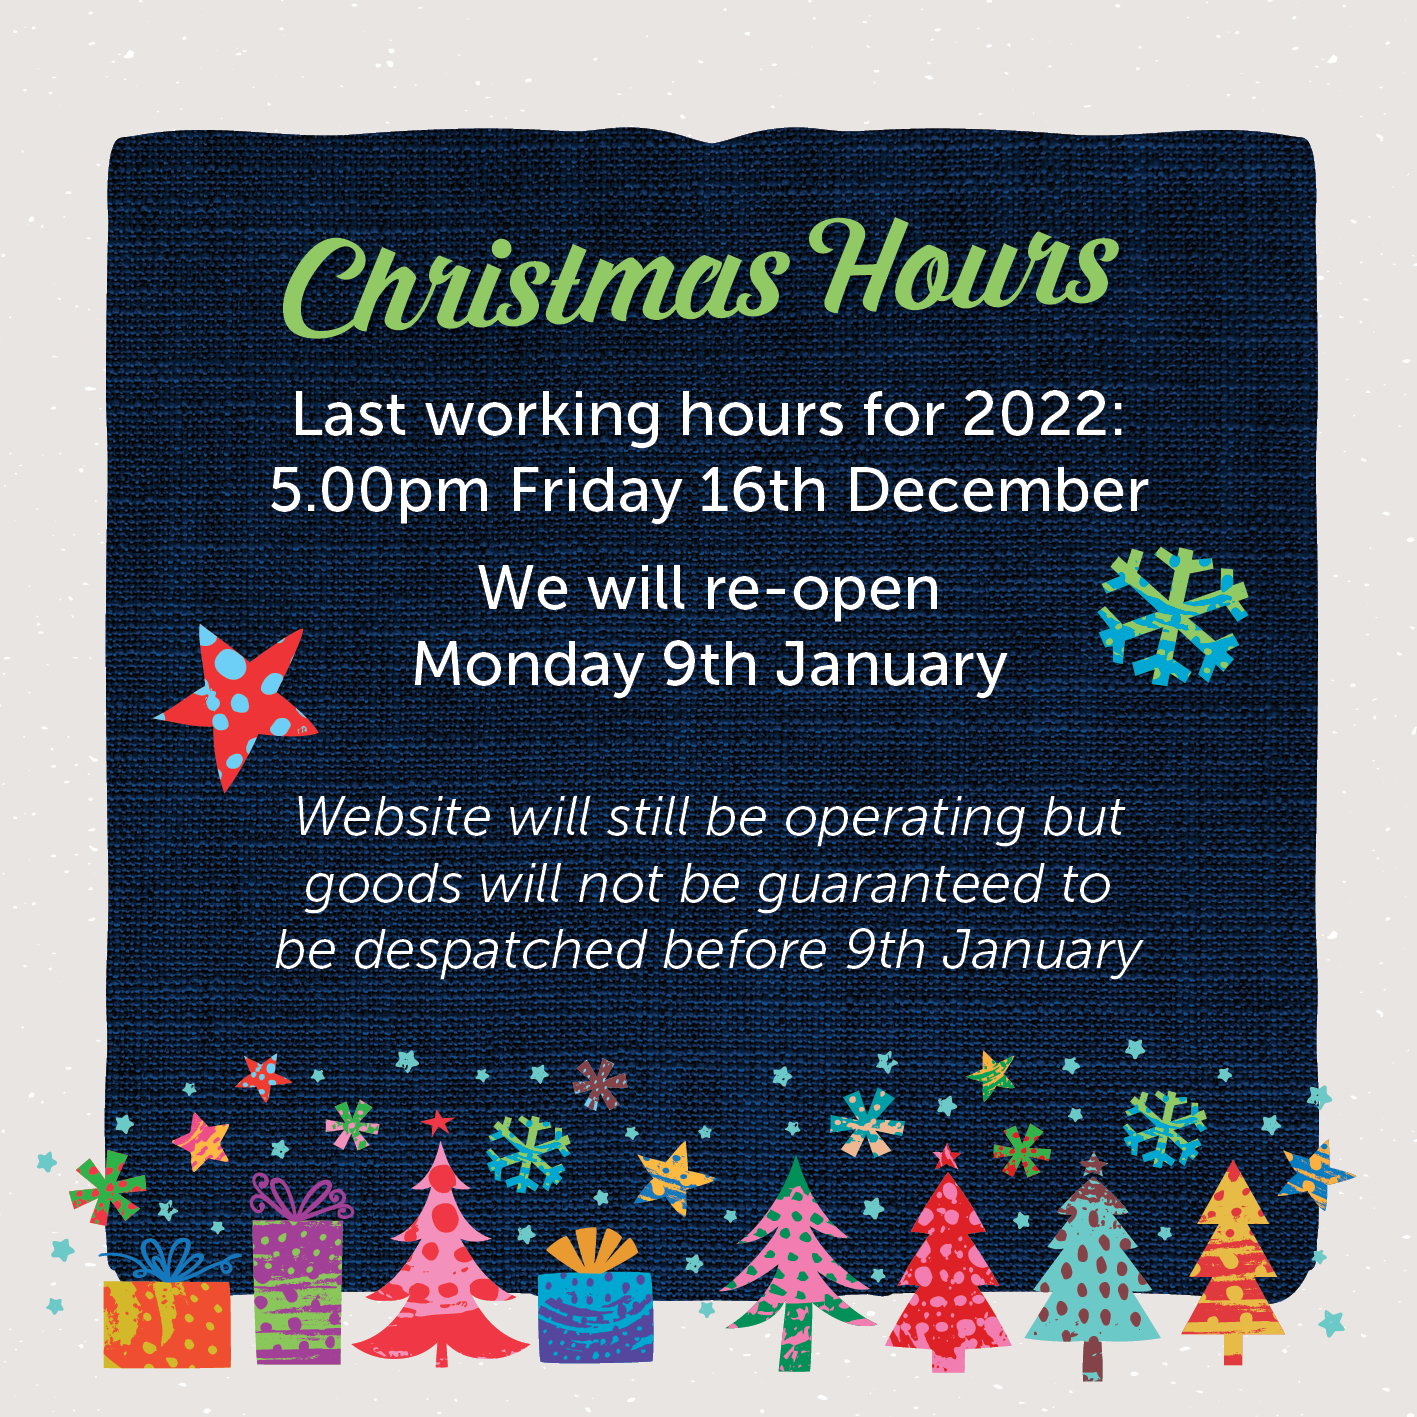 indigo niche holiday season business hours